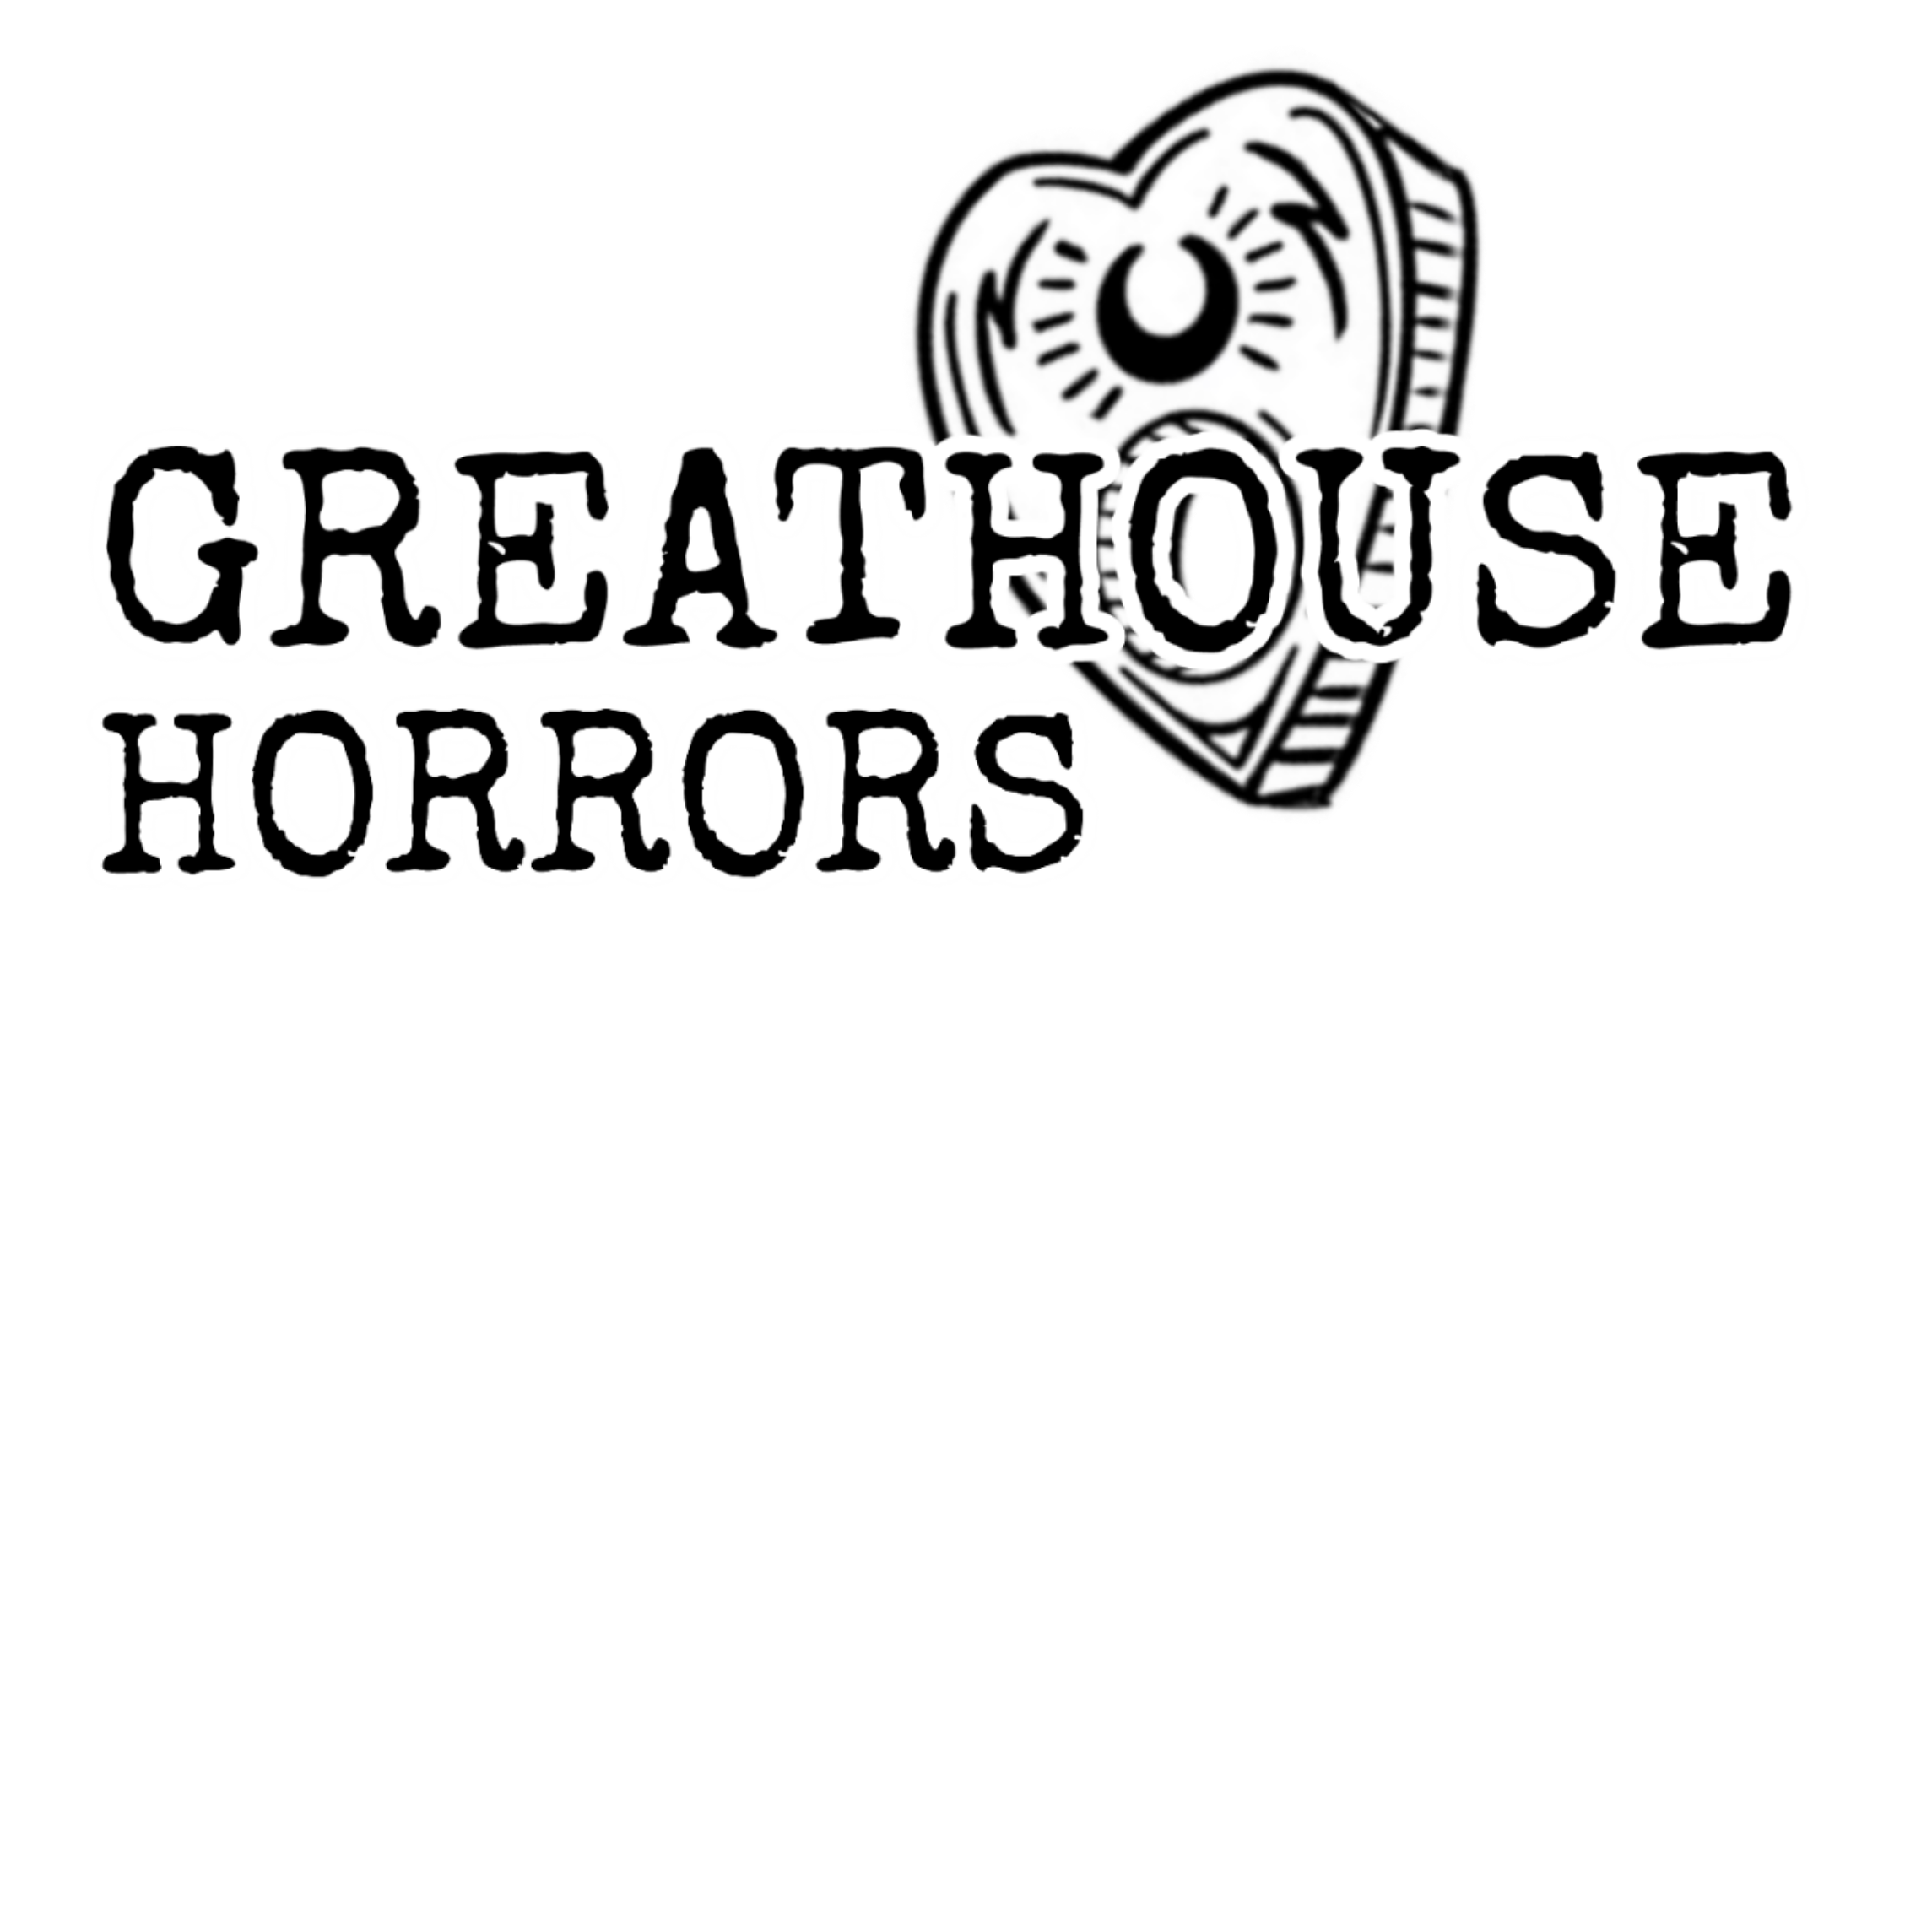 Greathouse Horrors